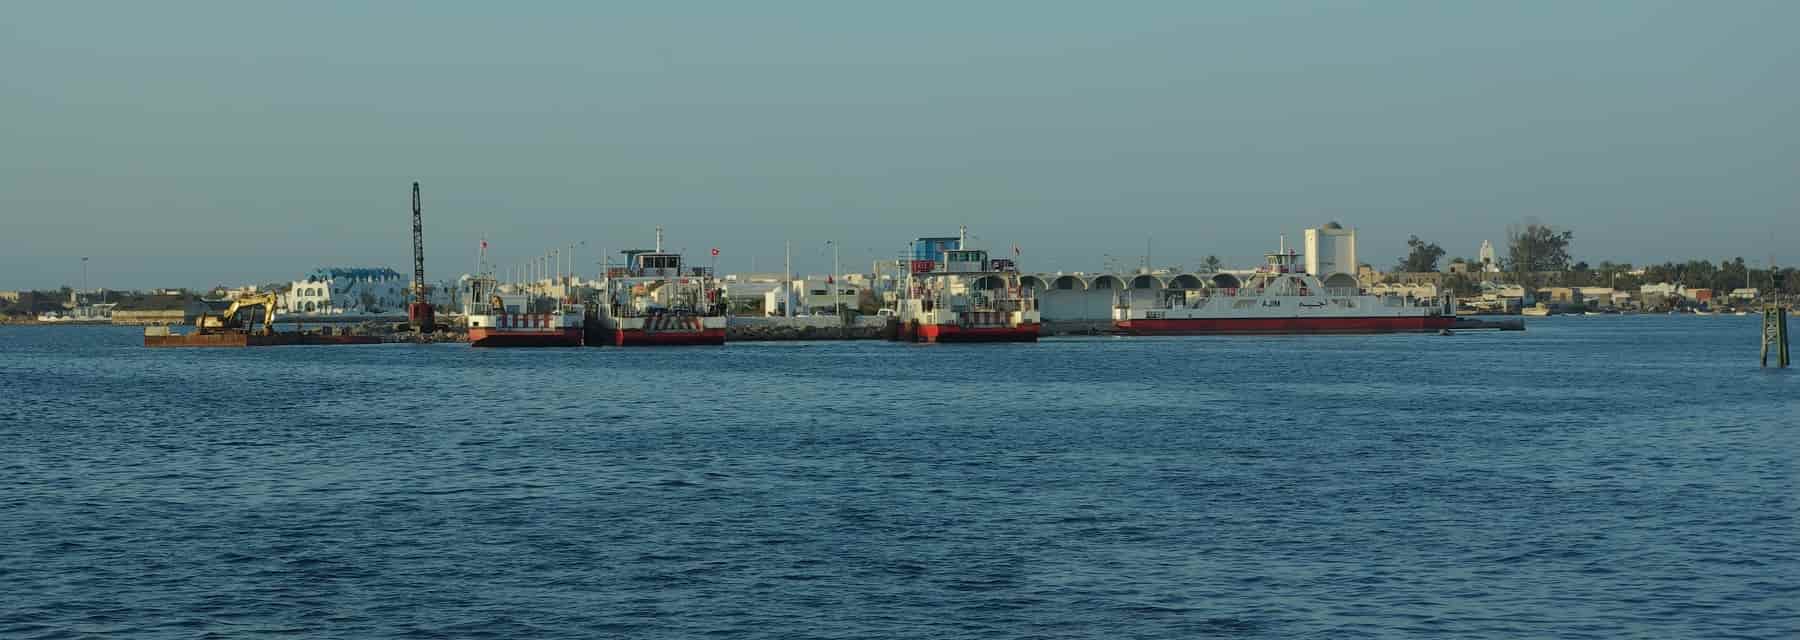 Ferrys at Ajim port